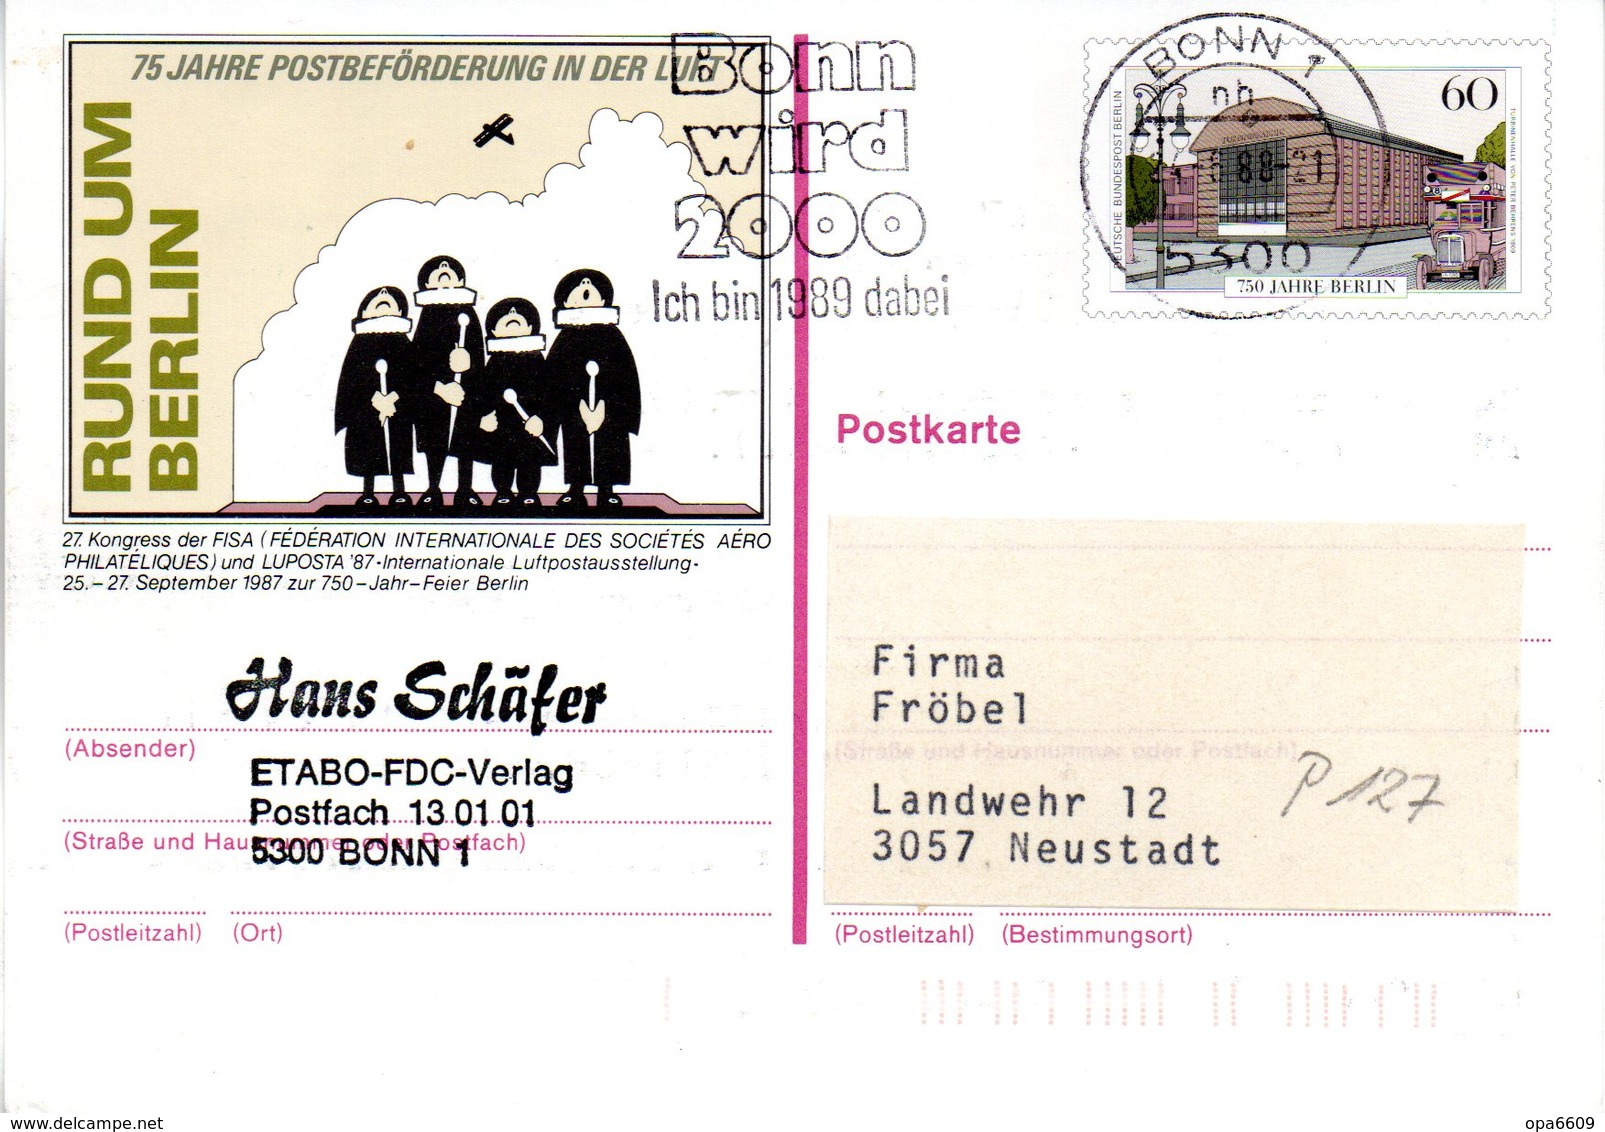 WB Amtliche Ganzsachen-Sonderpostkarte P 127 "LUPOSTA'87" Wst."750 Jahre Berlin" 60(Pf) Mehrfarbig, MWSt 24.8.88 BONN 1 - Cartes Postales - Oblitérées